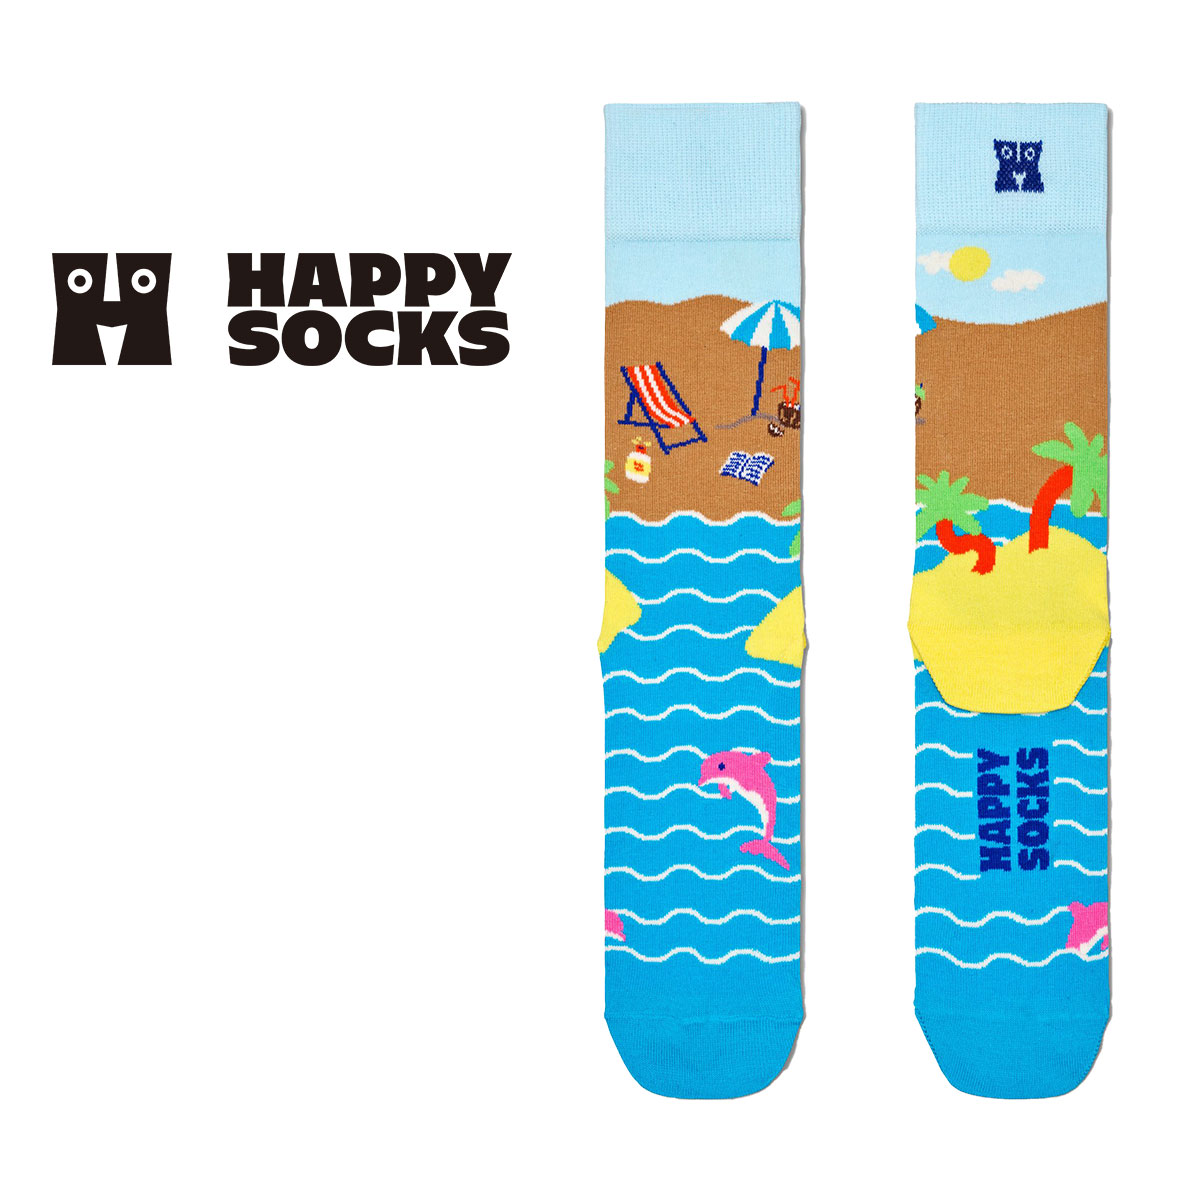 【24SS】Happy Socks ハッピーソックス Beach Break ( ビーチ ブレイク ) クルー丈 ソックス ユニセックス メンズ ＆ レディス 10240001